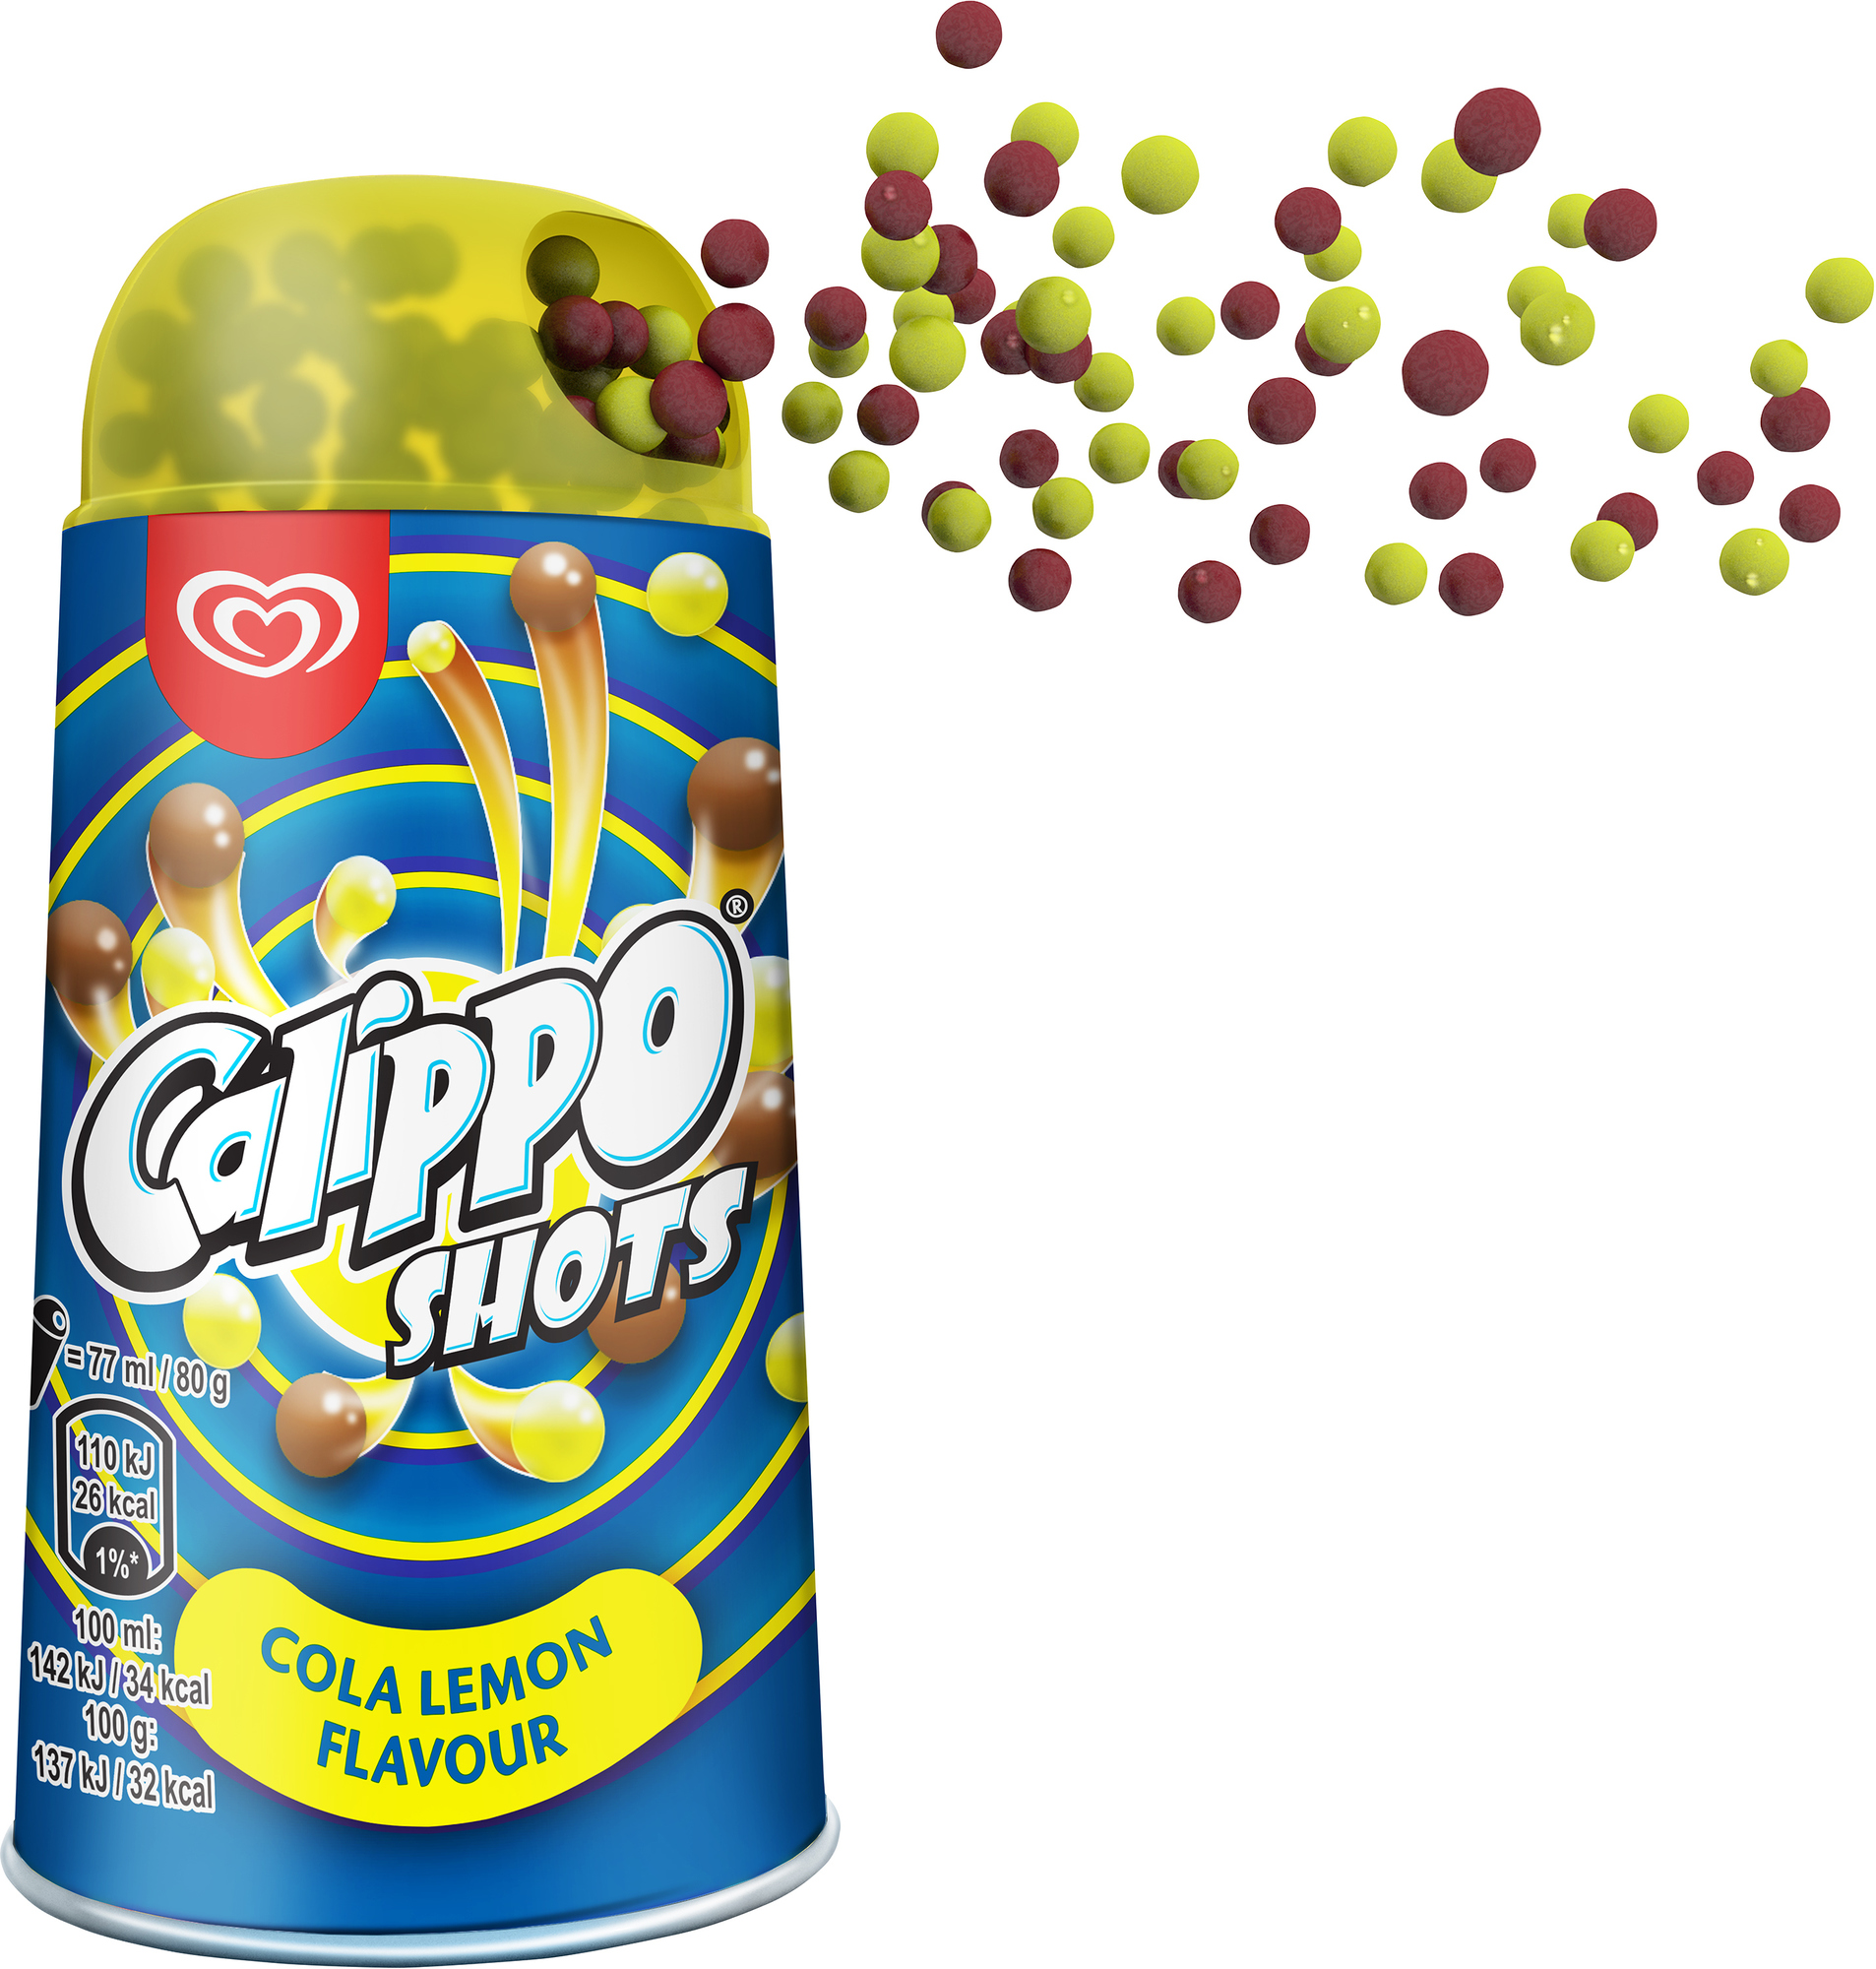 Calippo Shots Cola Lemon Eis 77ml